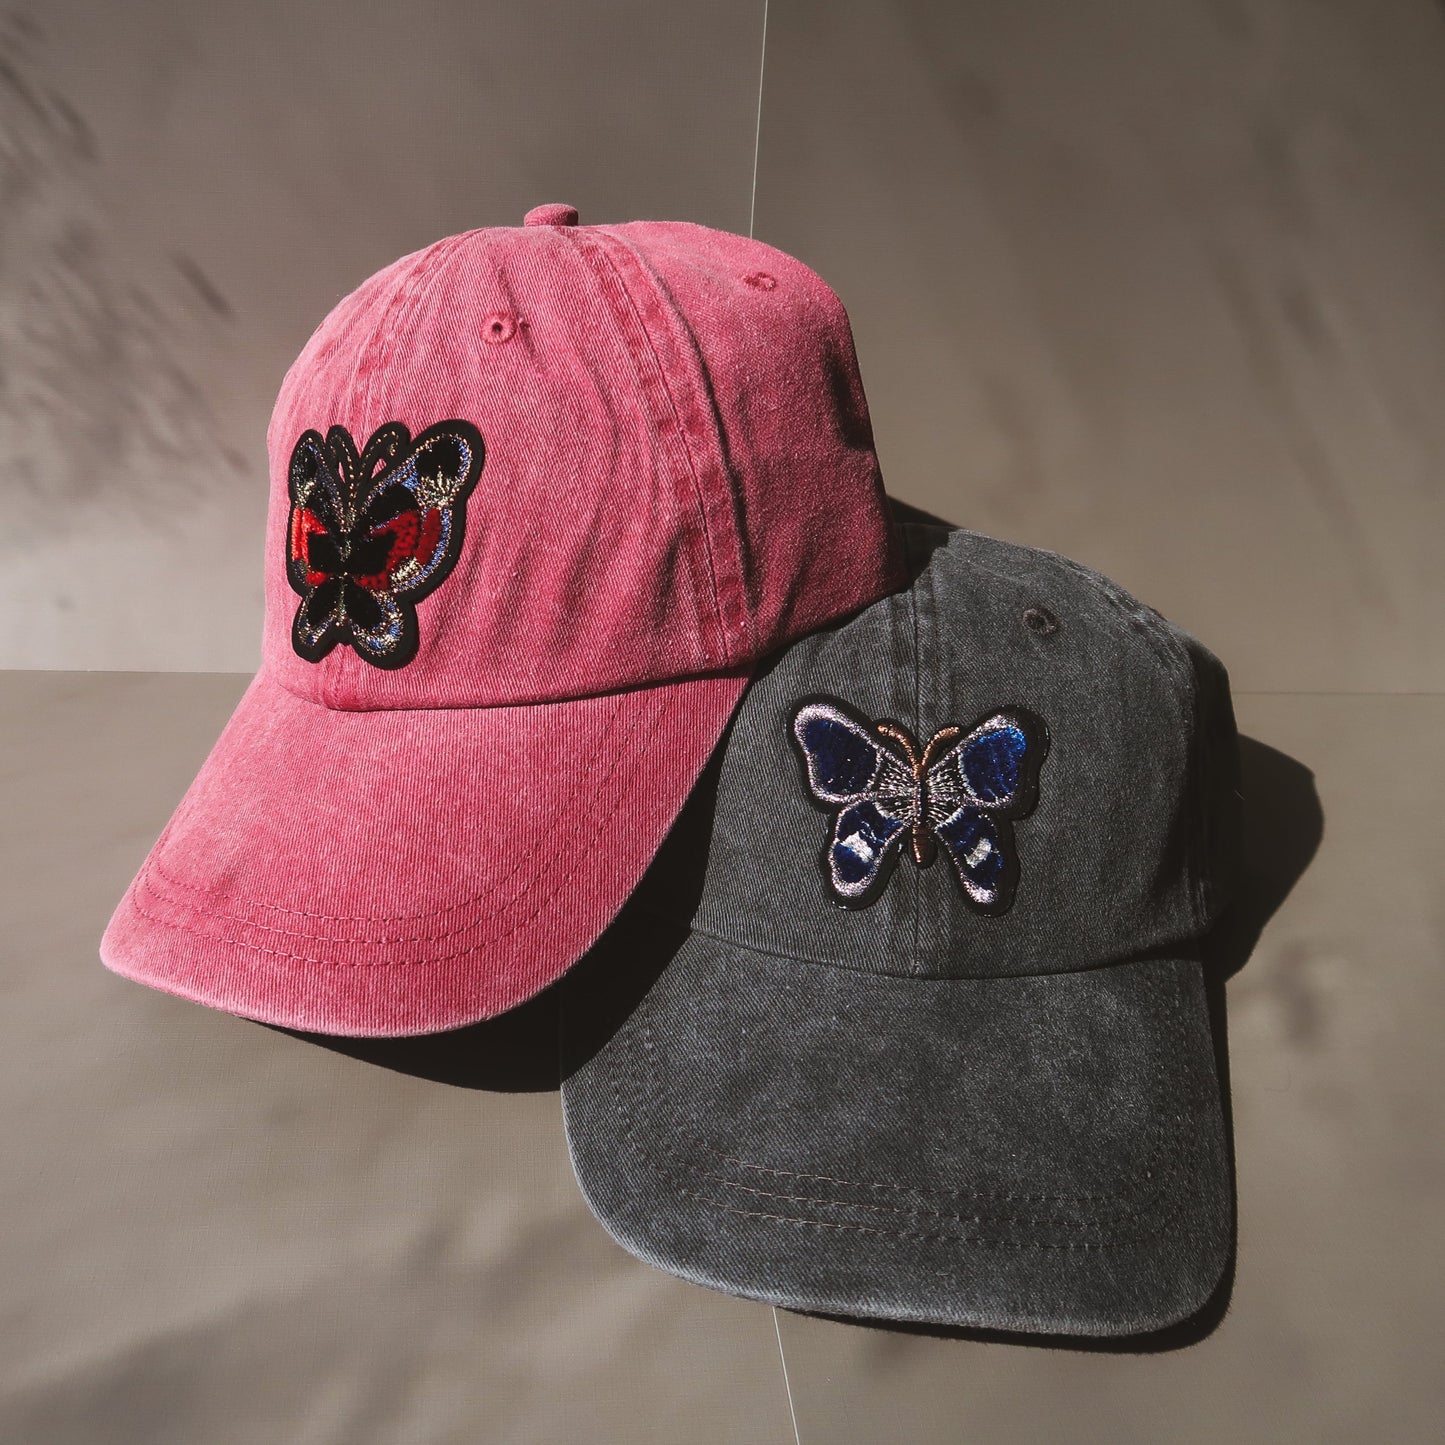 The Butterfly Baseball Cap